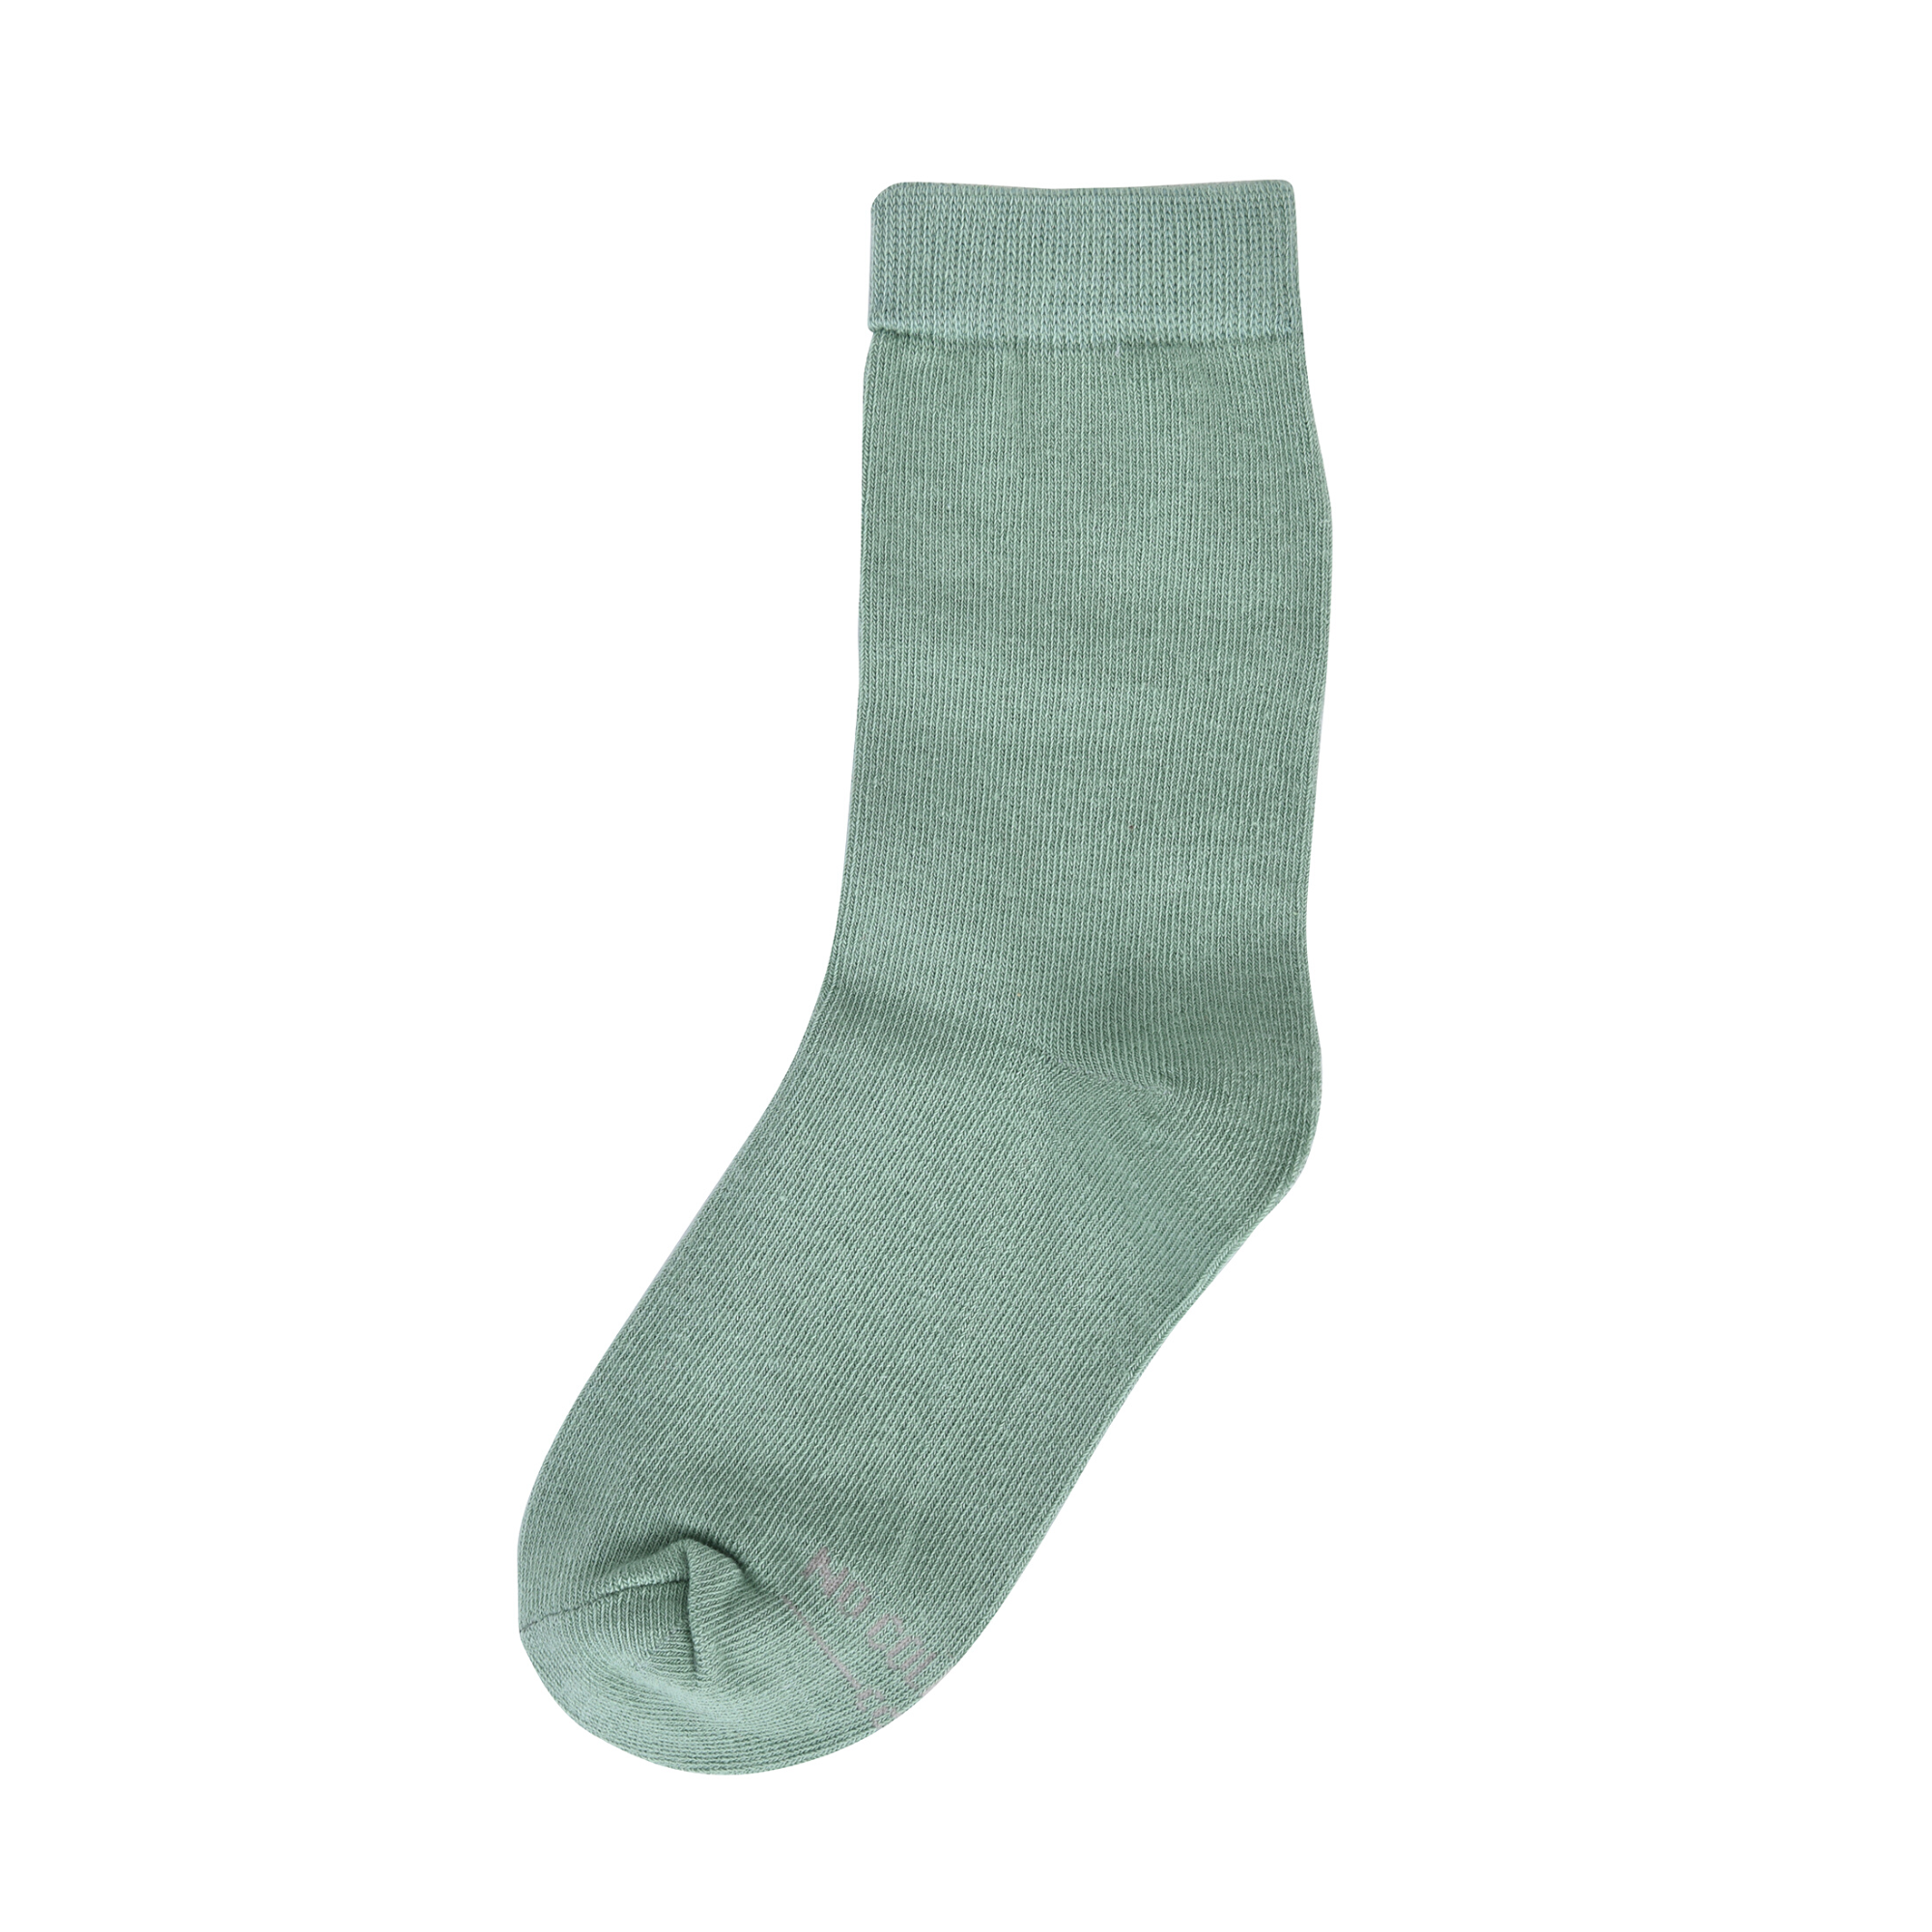 Solid Sage Green Kids Socks